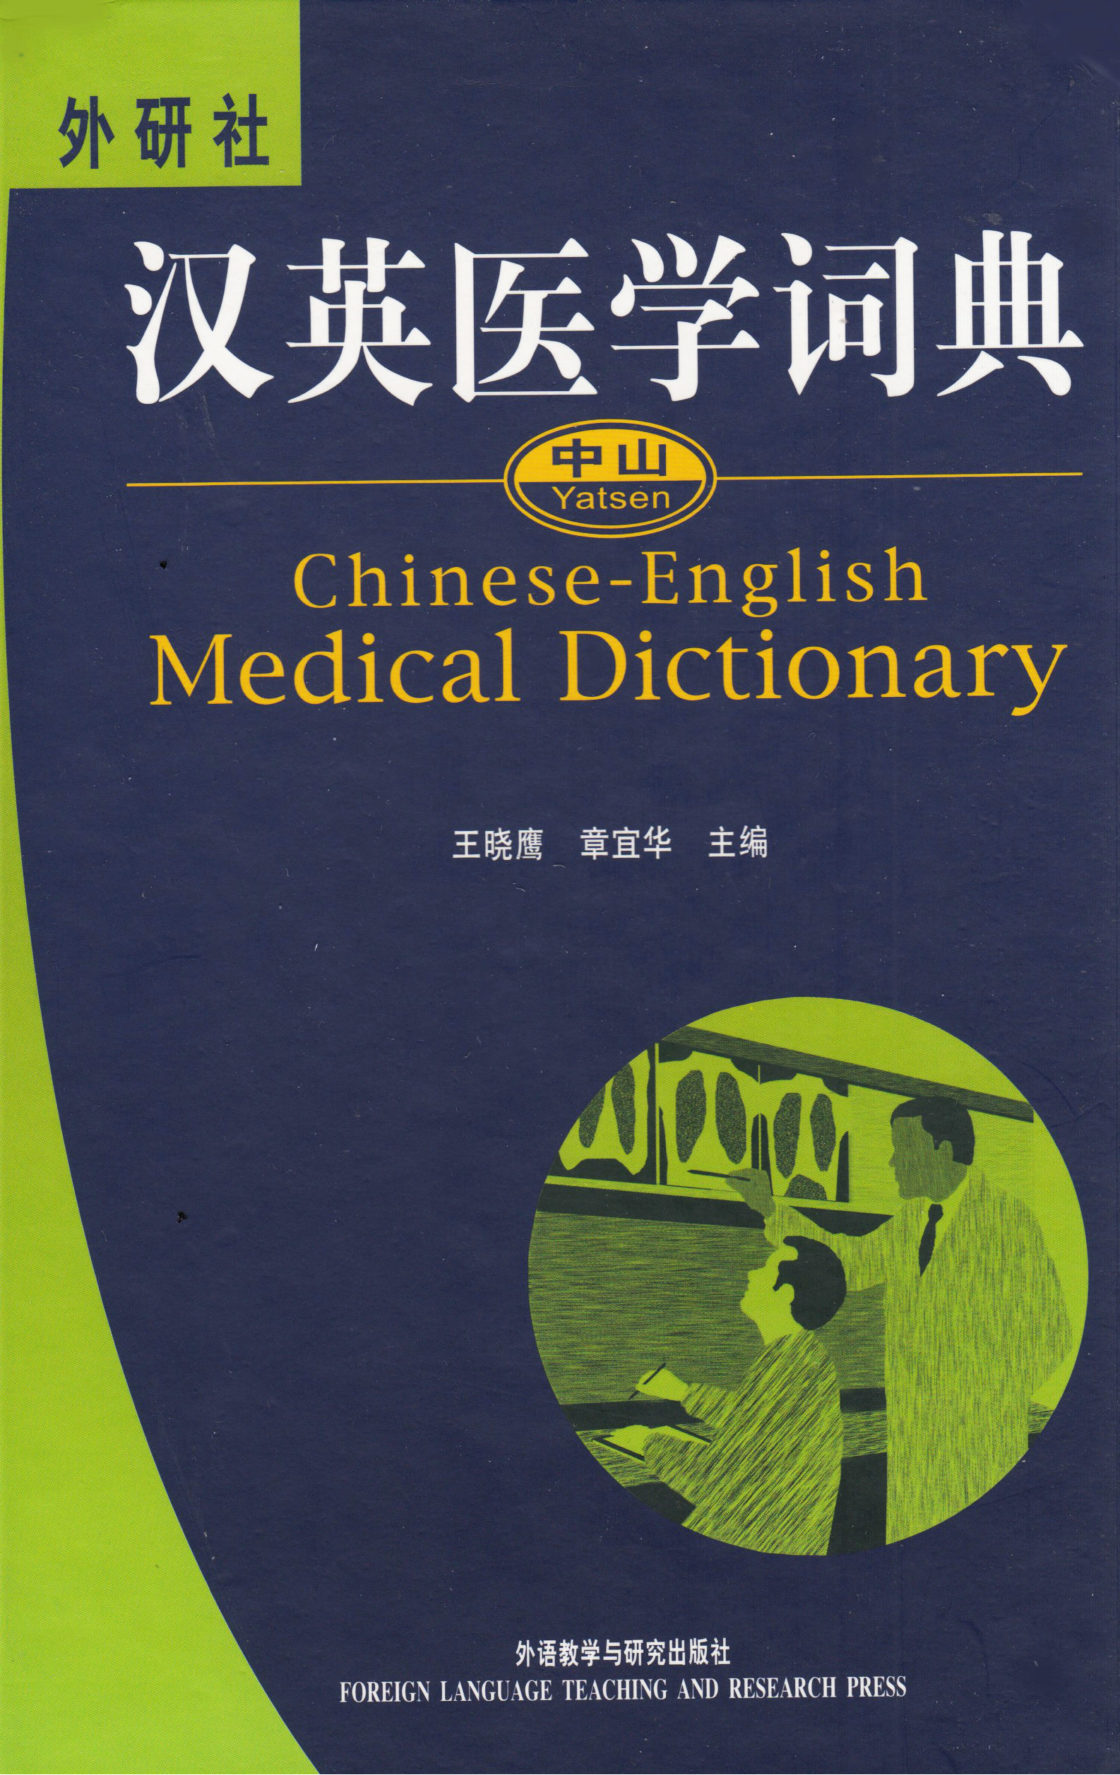 Chinese-English Medical Dictionary